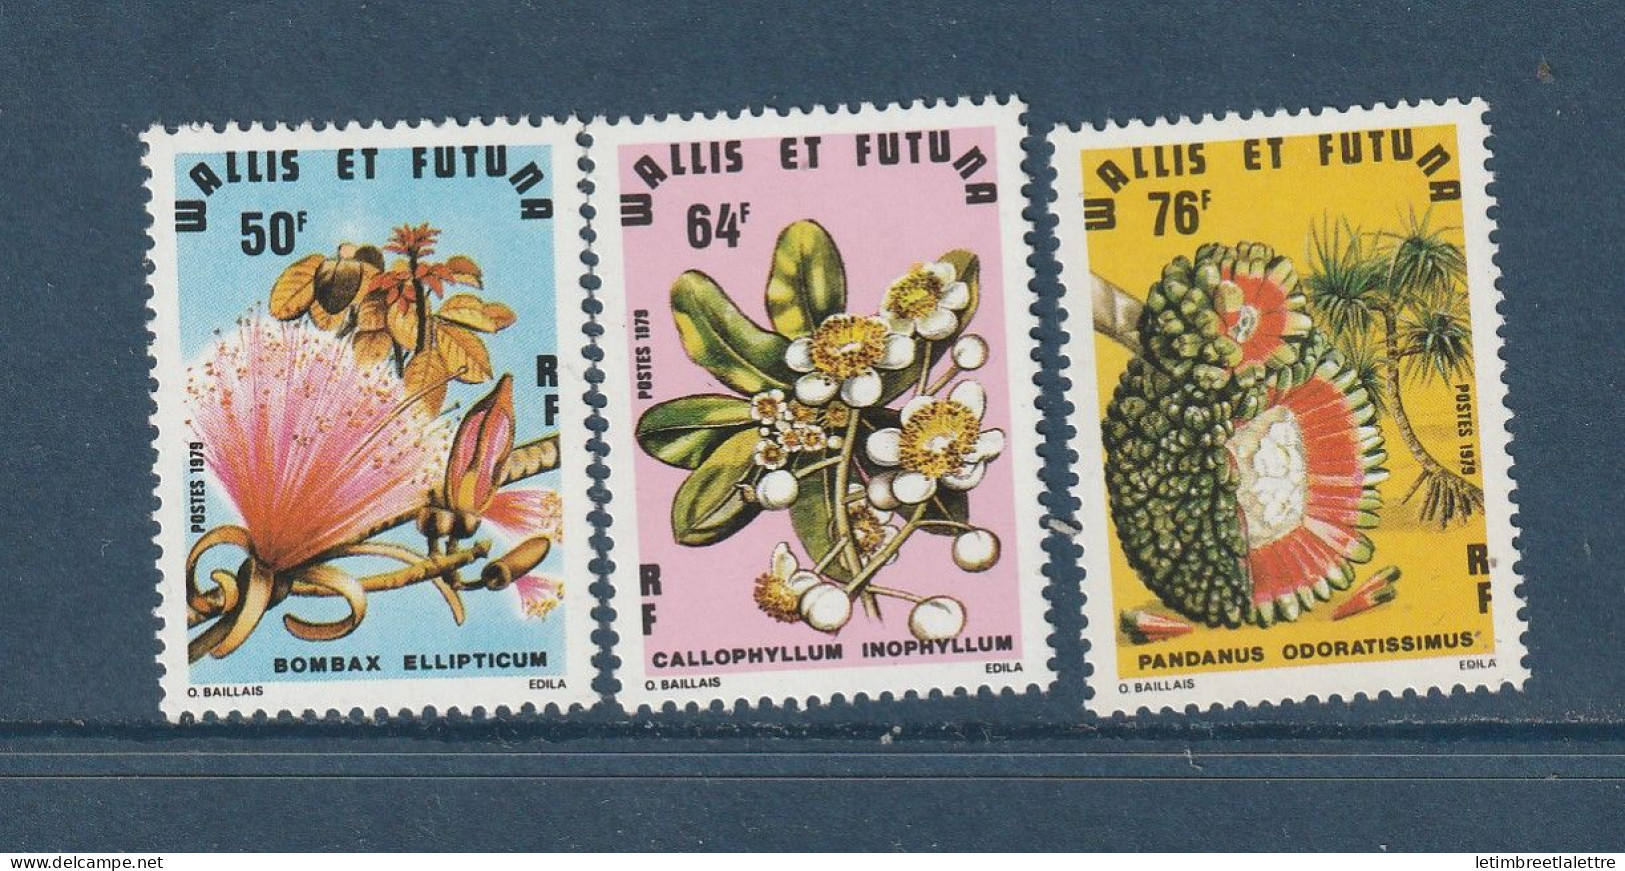 Wallis Et Futuna - YT N° 234 à 236 ** - Neuf Sans Charnière - 1979 - Nuevos